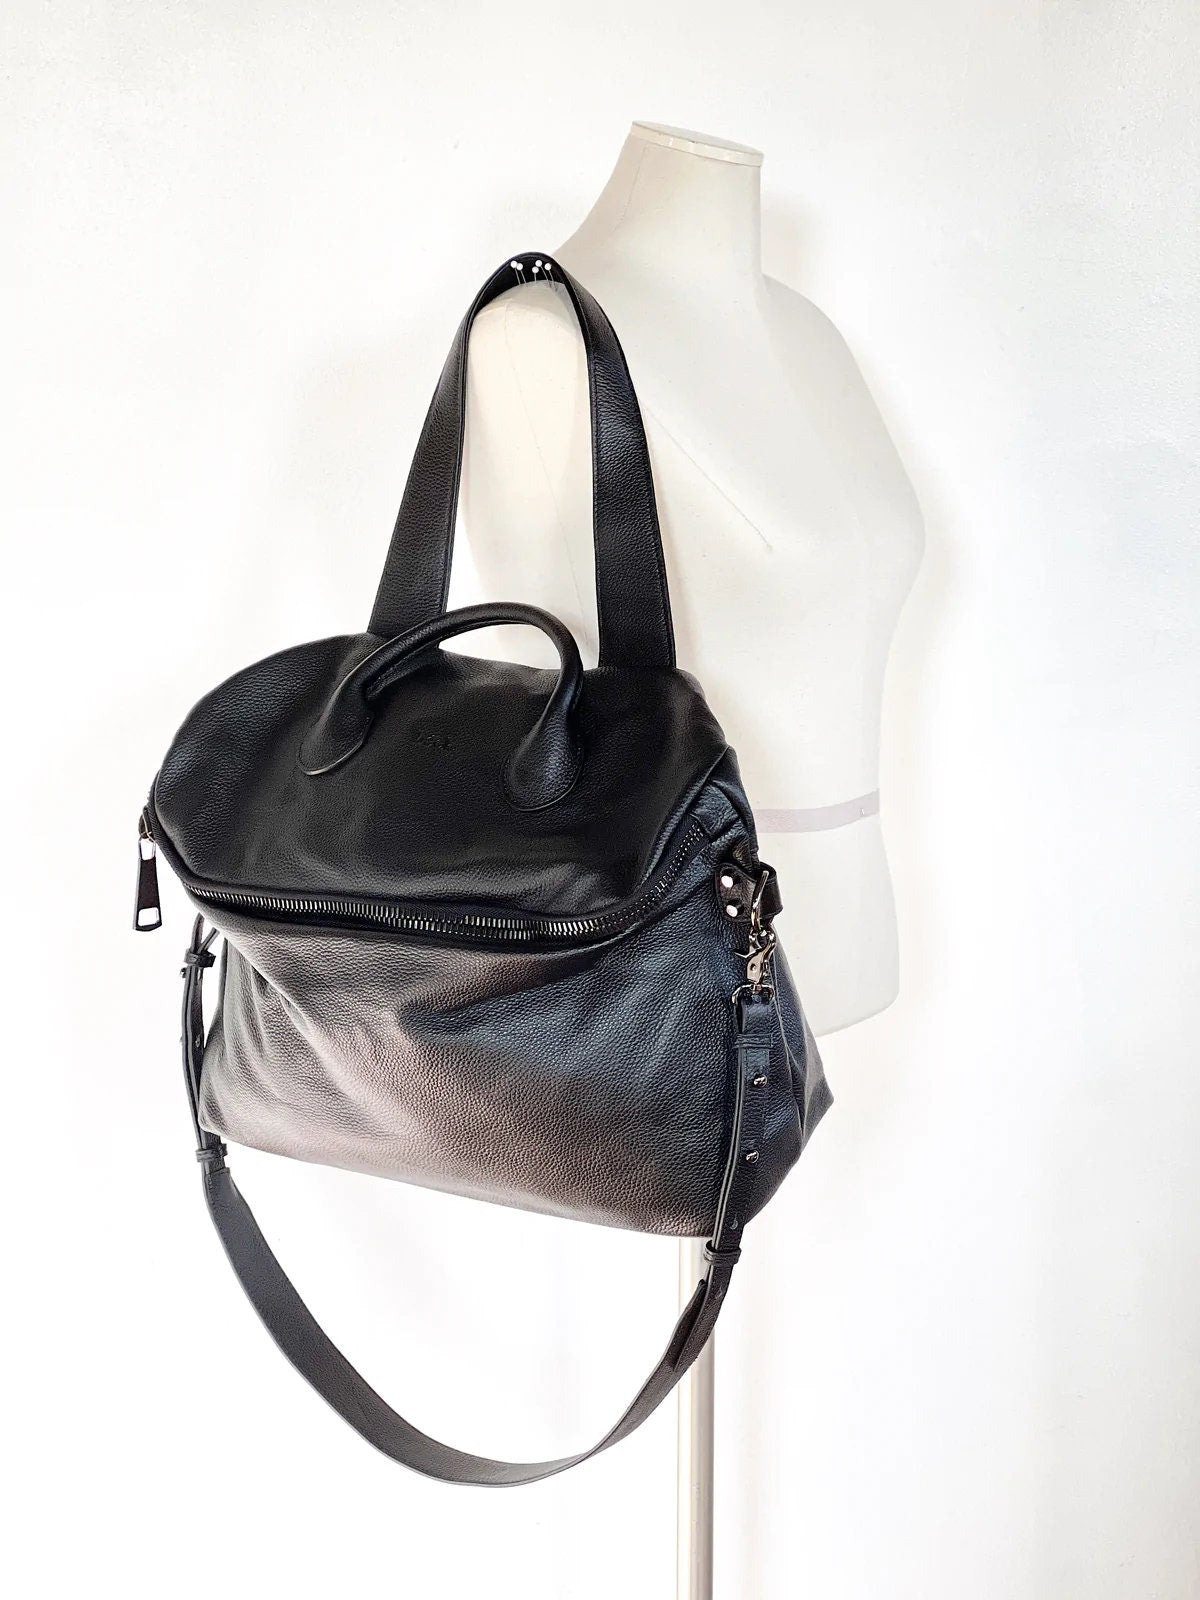 Alexel Jolie Large Italy Leather Zipper Bag, Grain Leather Shoulder Bag, Lady Fashion Bag Yellow, Travel Crossbody Bag, Gift for Her, black